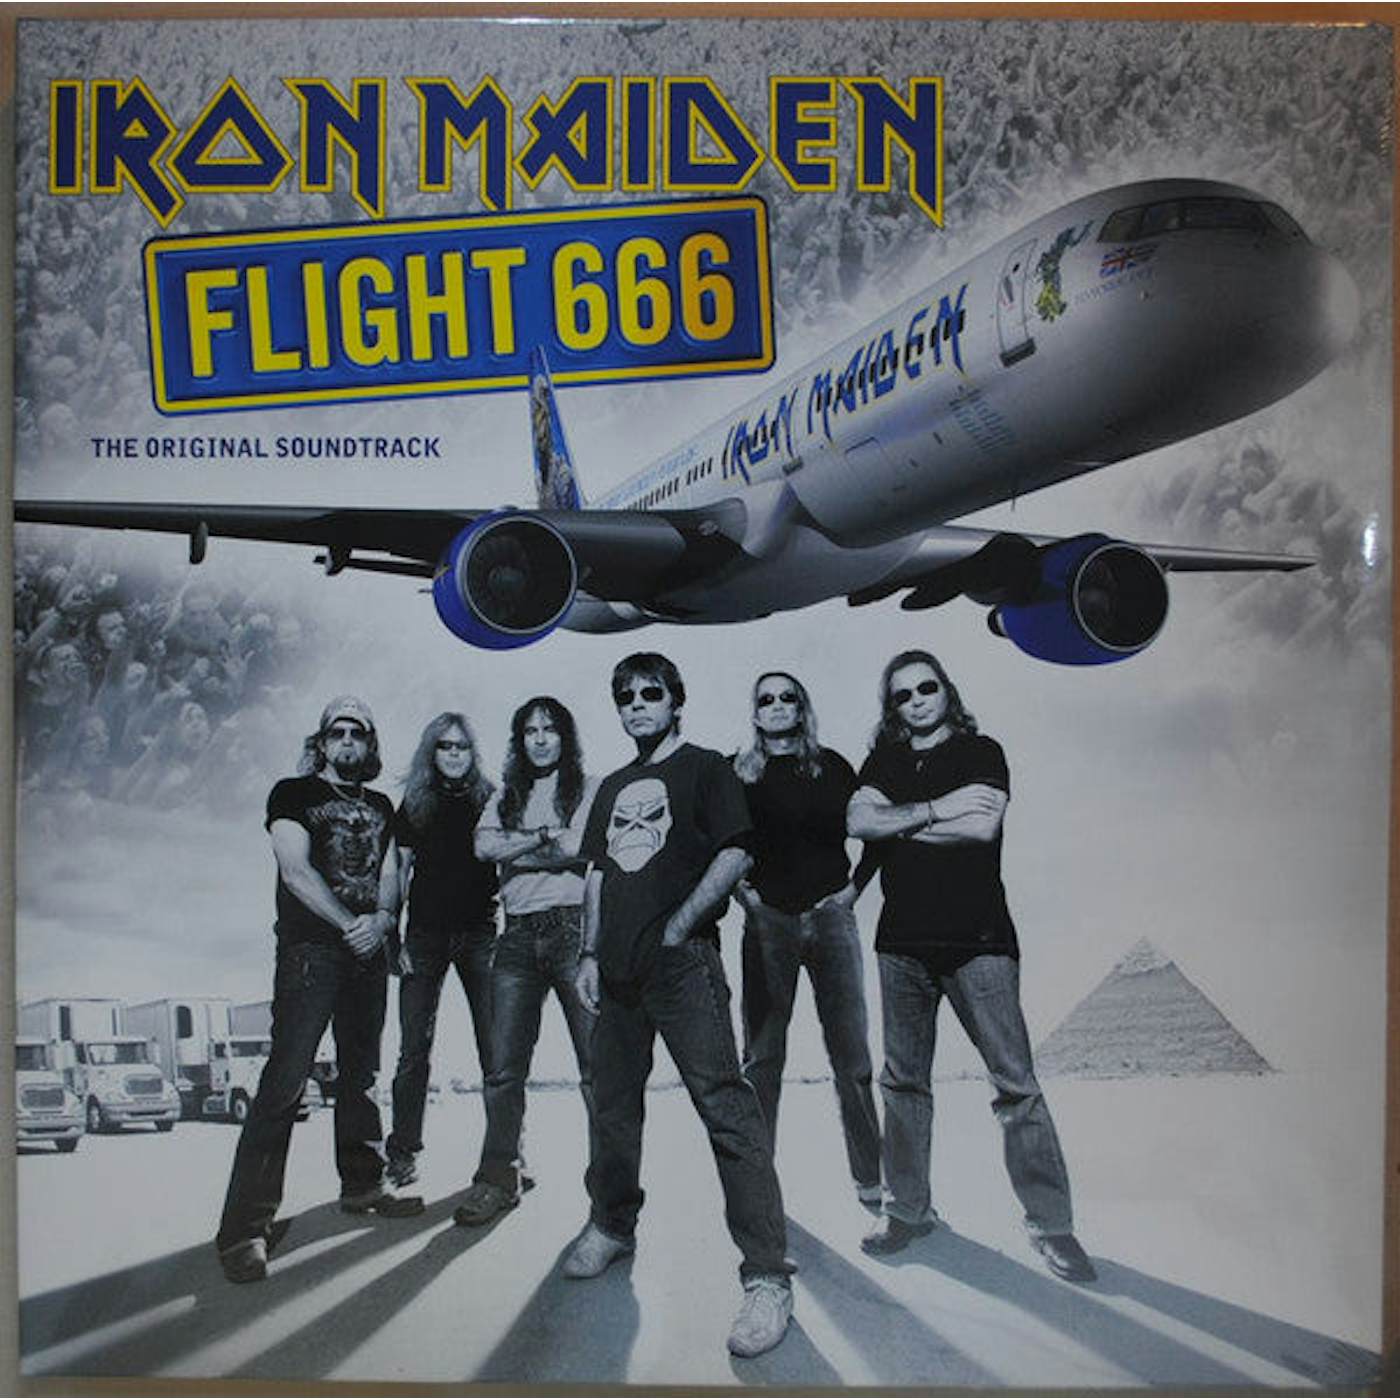 Iron Maiden LP Vinyl Record - Flight 666: The Original Sound